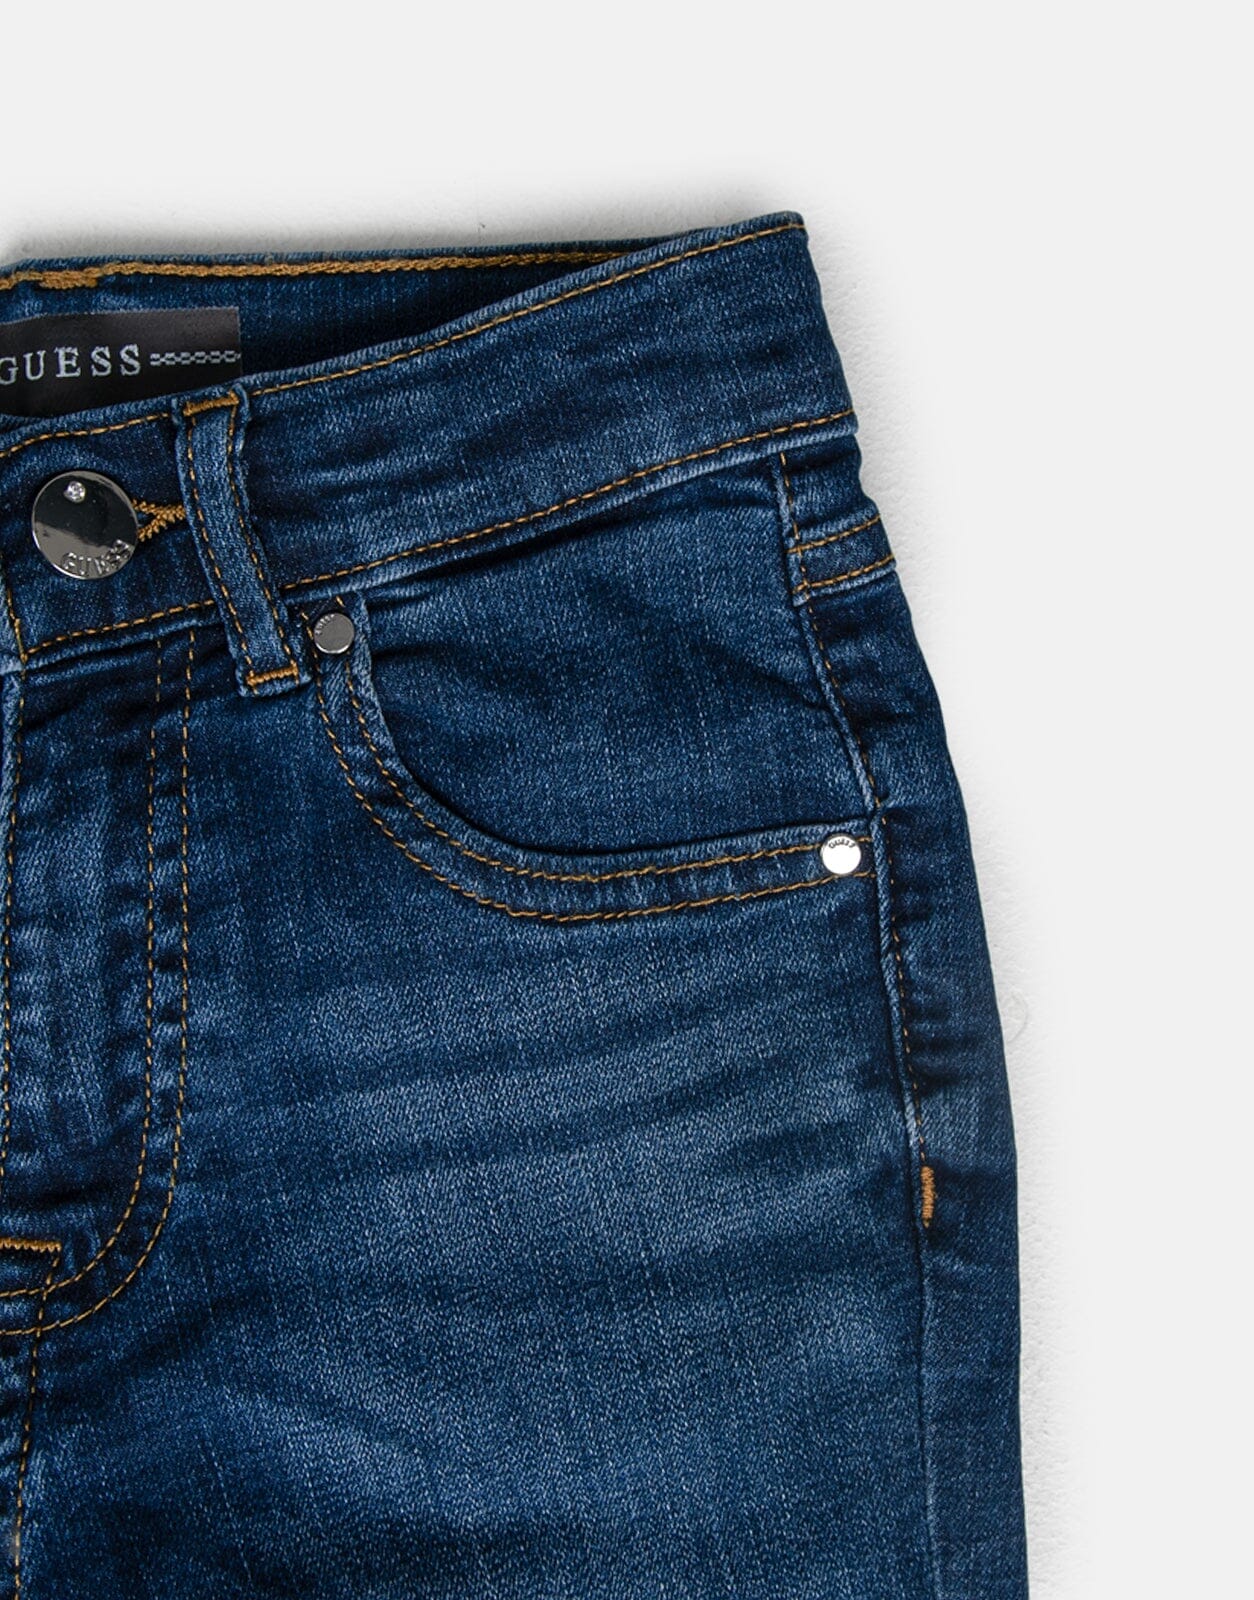 Guess Kids Girls Flare Fit Denim Jeans - Subwear